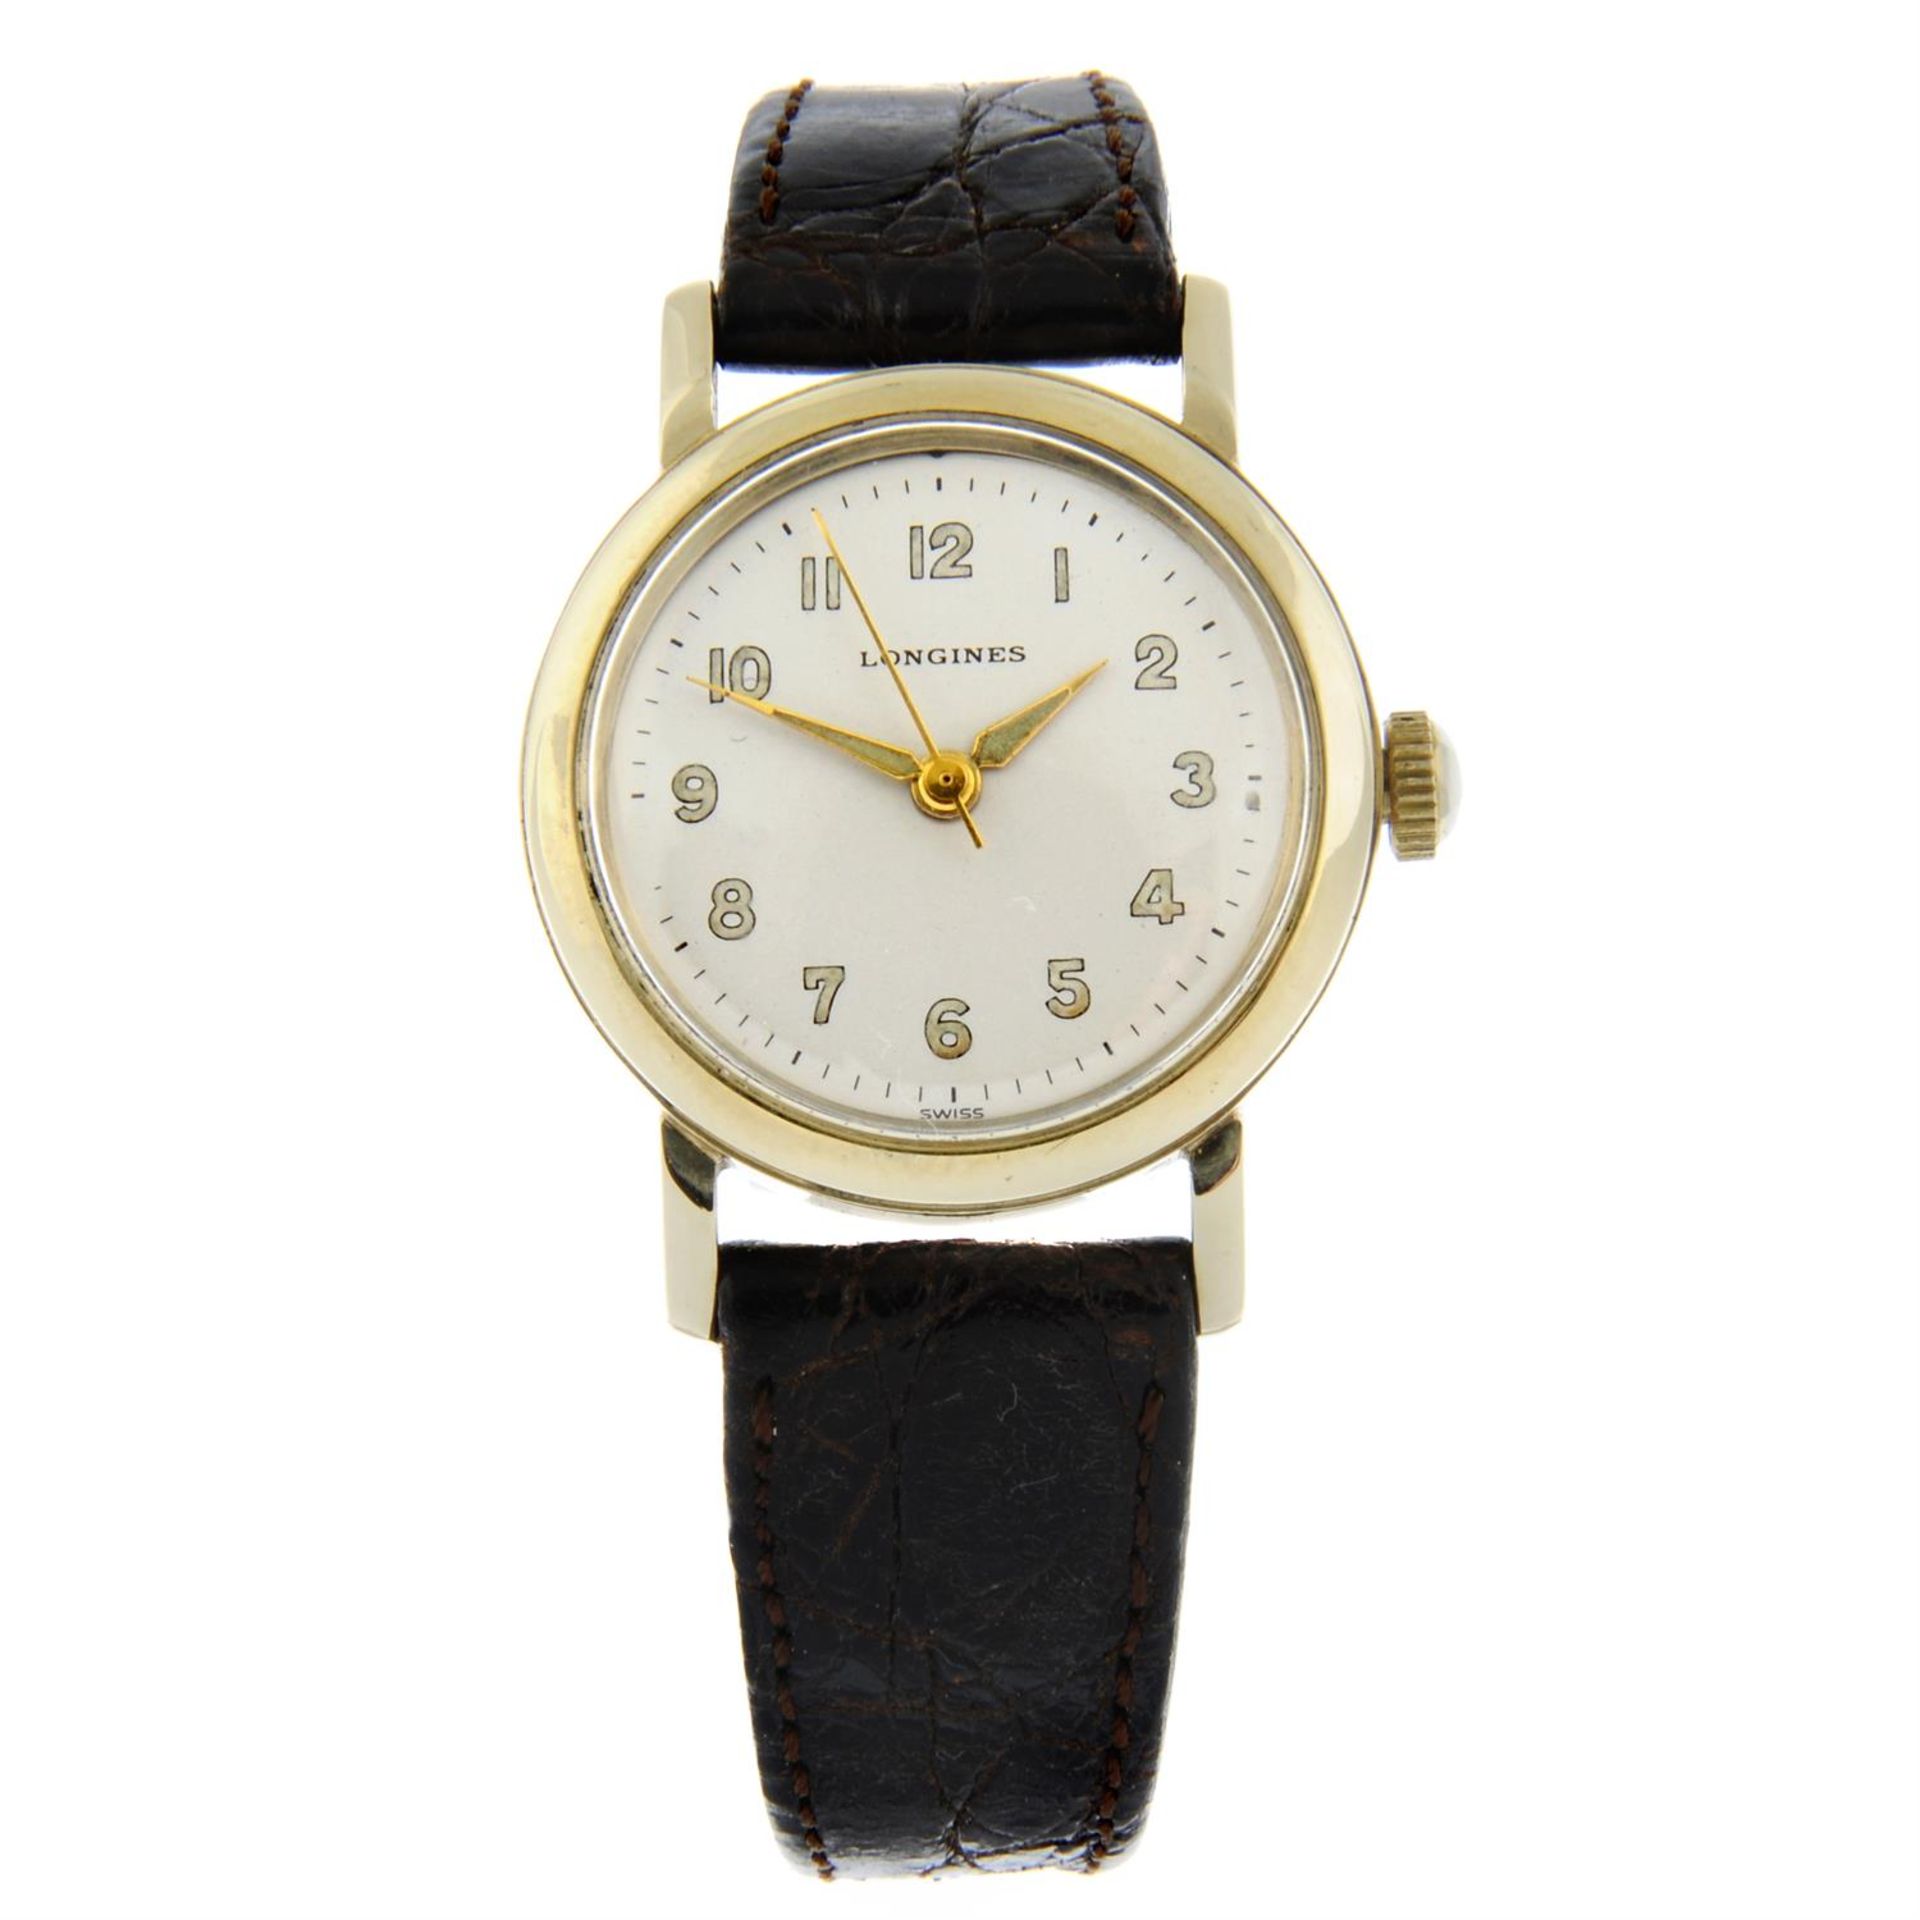 LONGINES - a yellow metal wrist watch, 29mm.